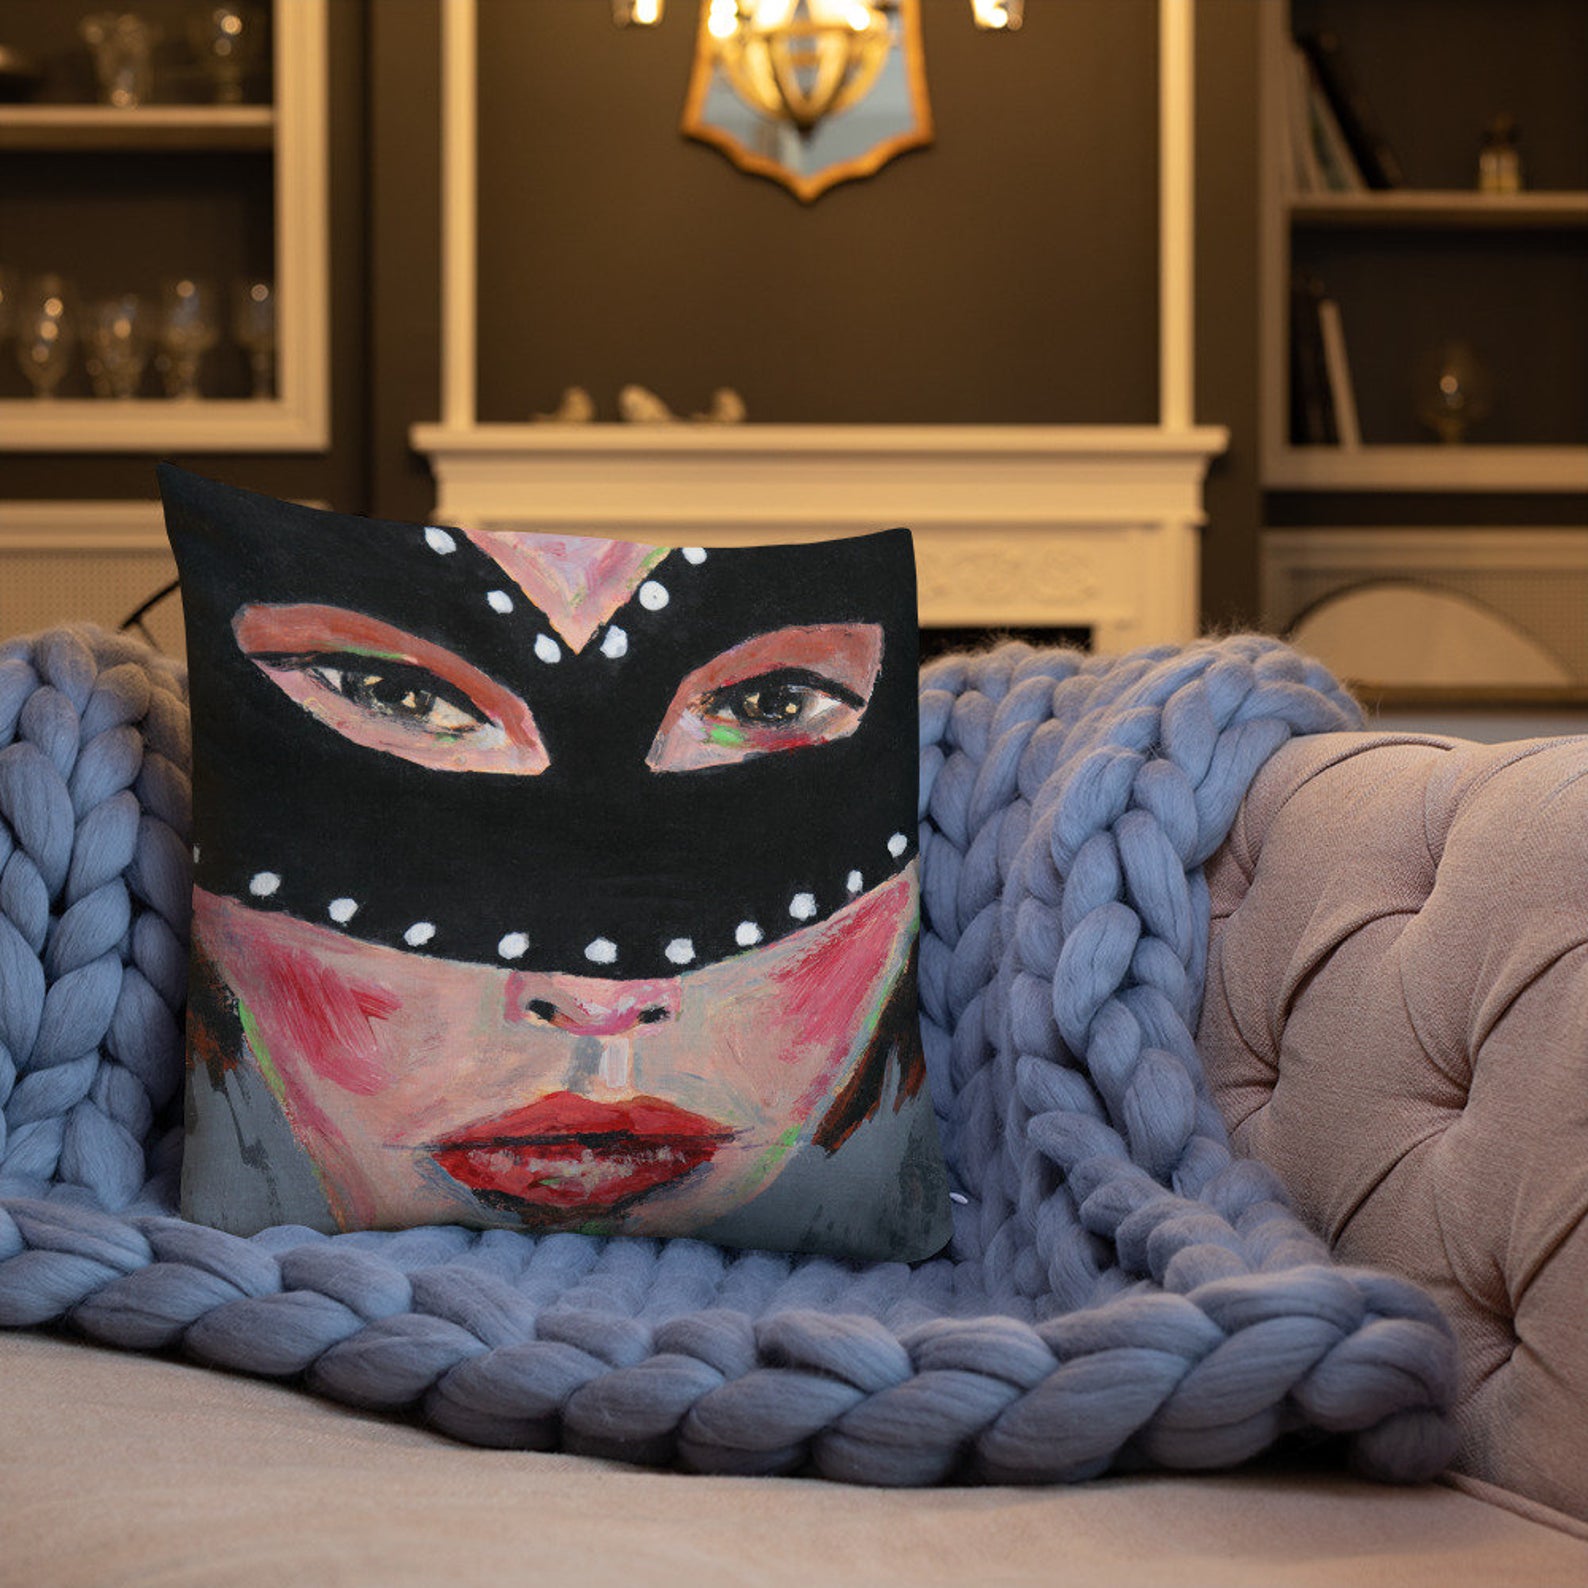 Katie Jeanne Wood - masquerade mask halloween pillow